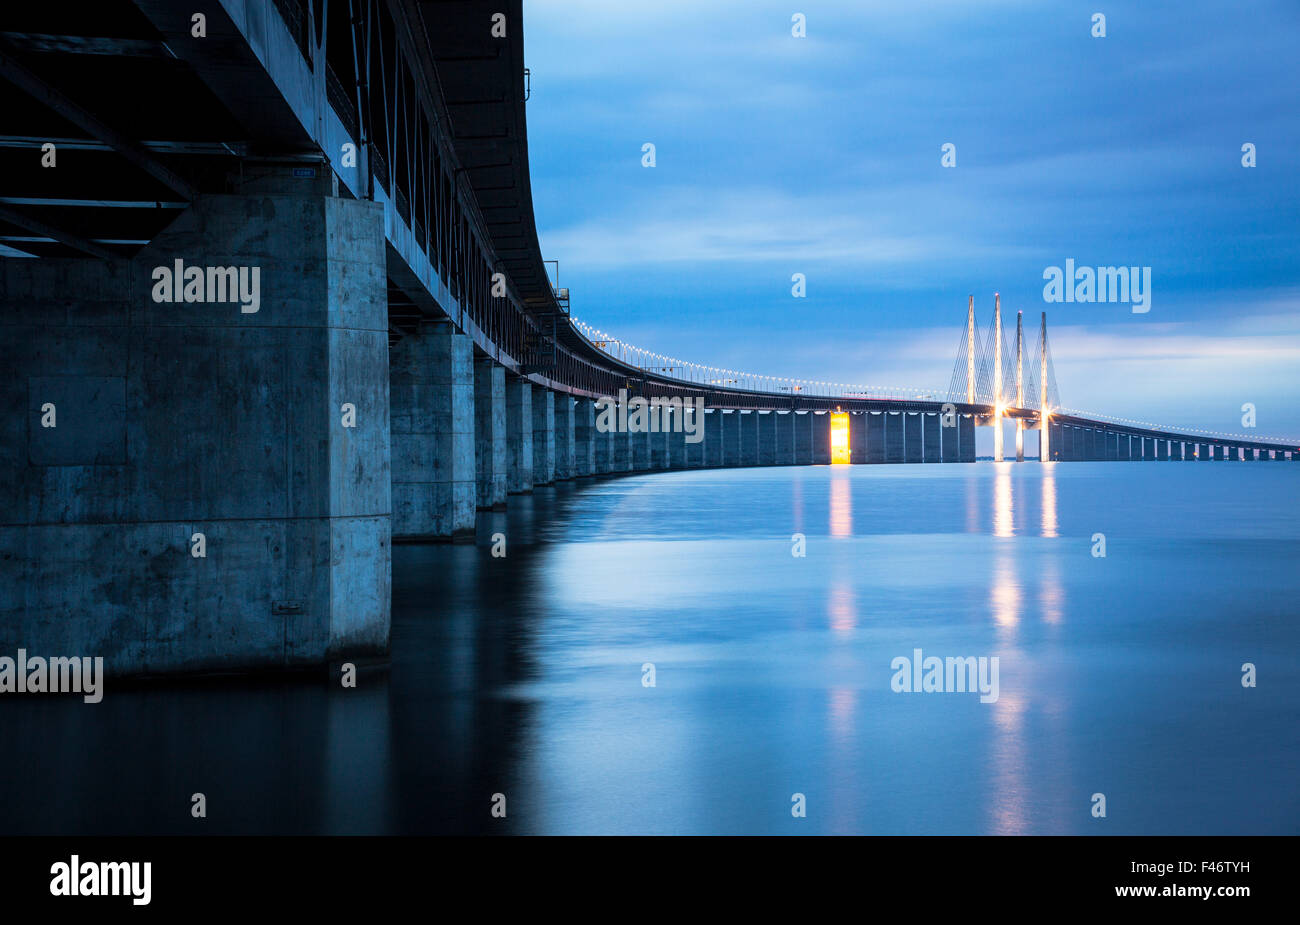 Oresund Bridge, Øresundsbroen, world's longest cable-stayed bridge connecting Copenhagen with Malmö, Denmark, Sweden Stock Photo